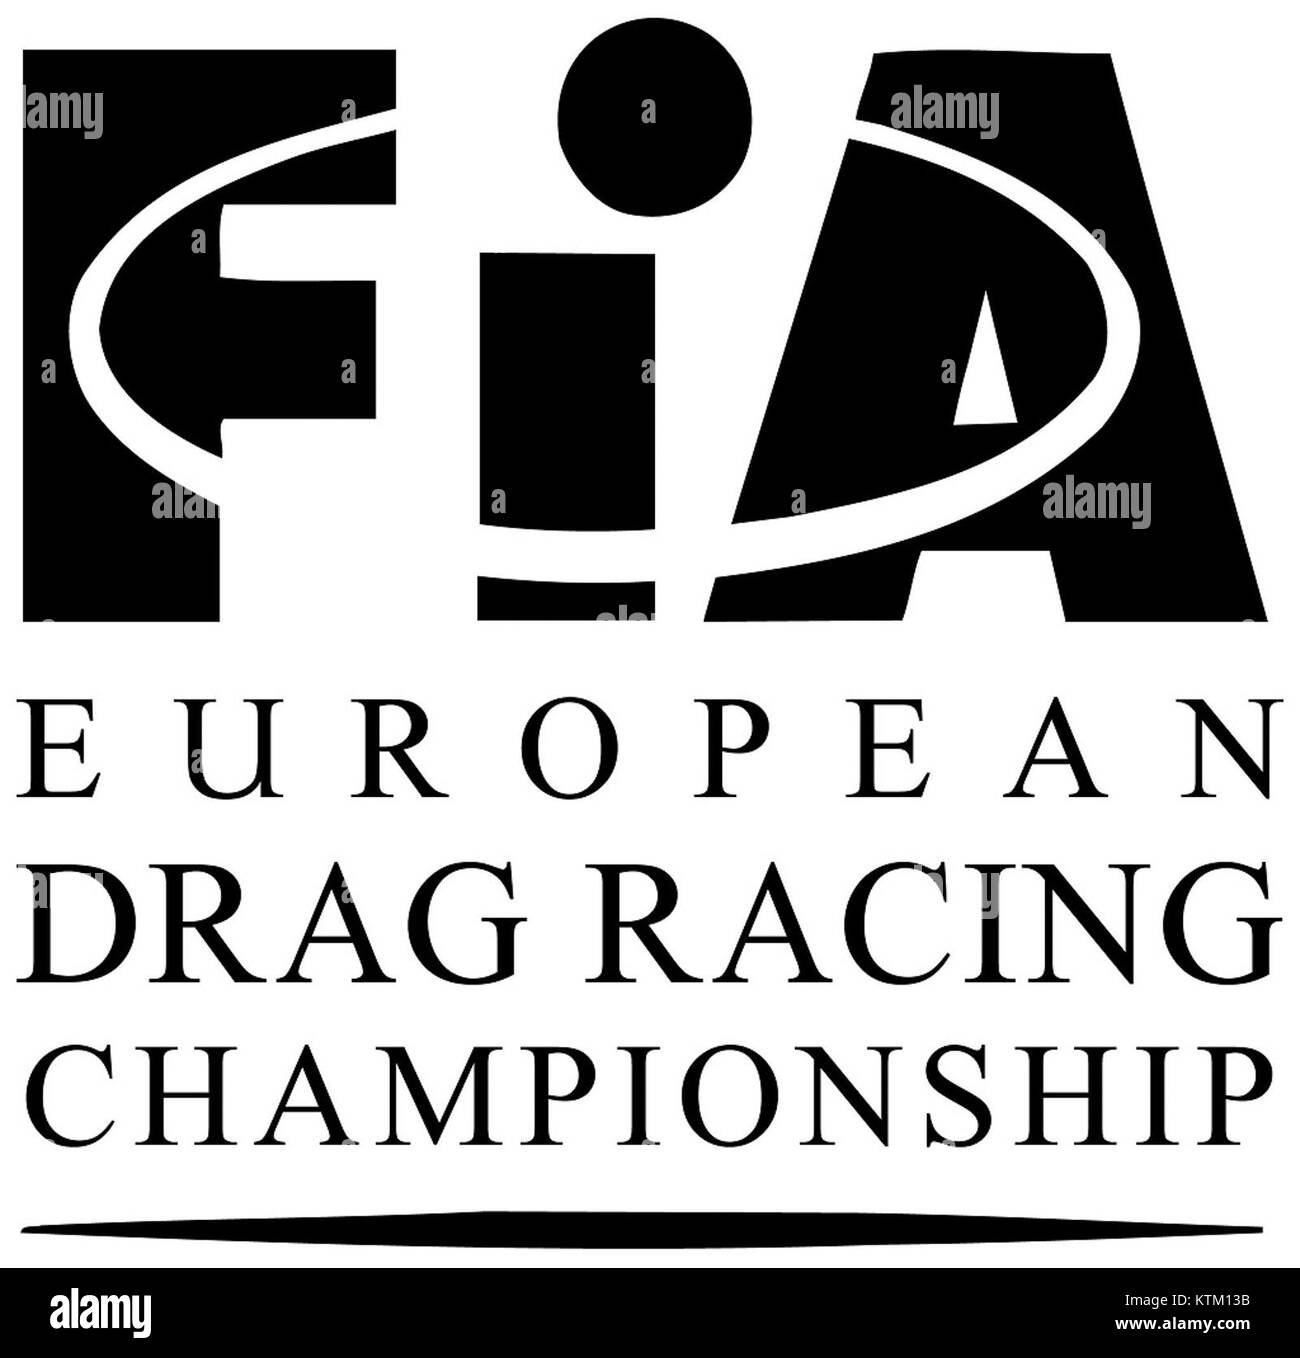 Fia european drag racing championship logo Stock Photo